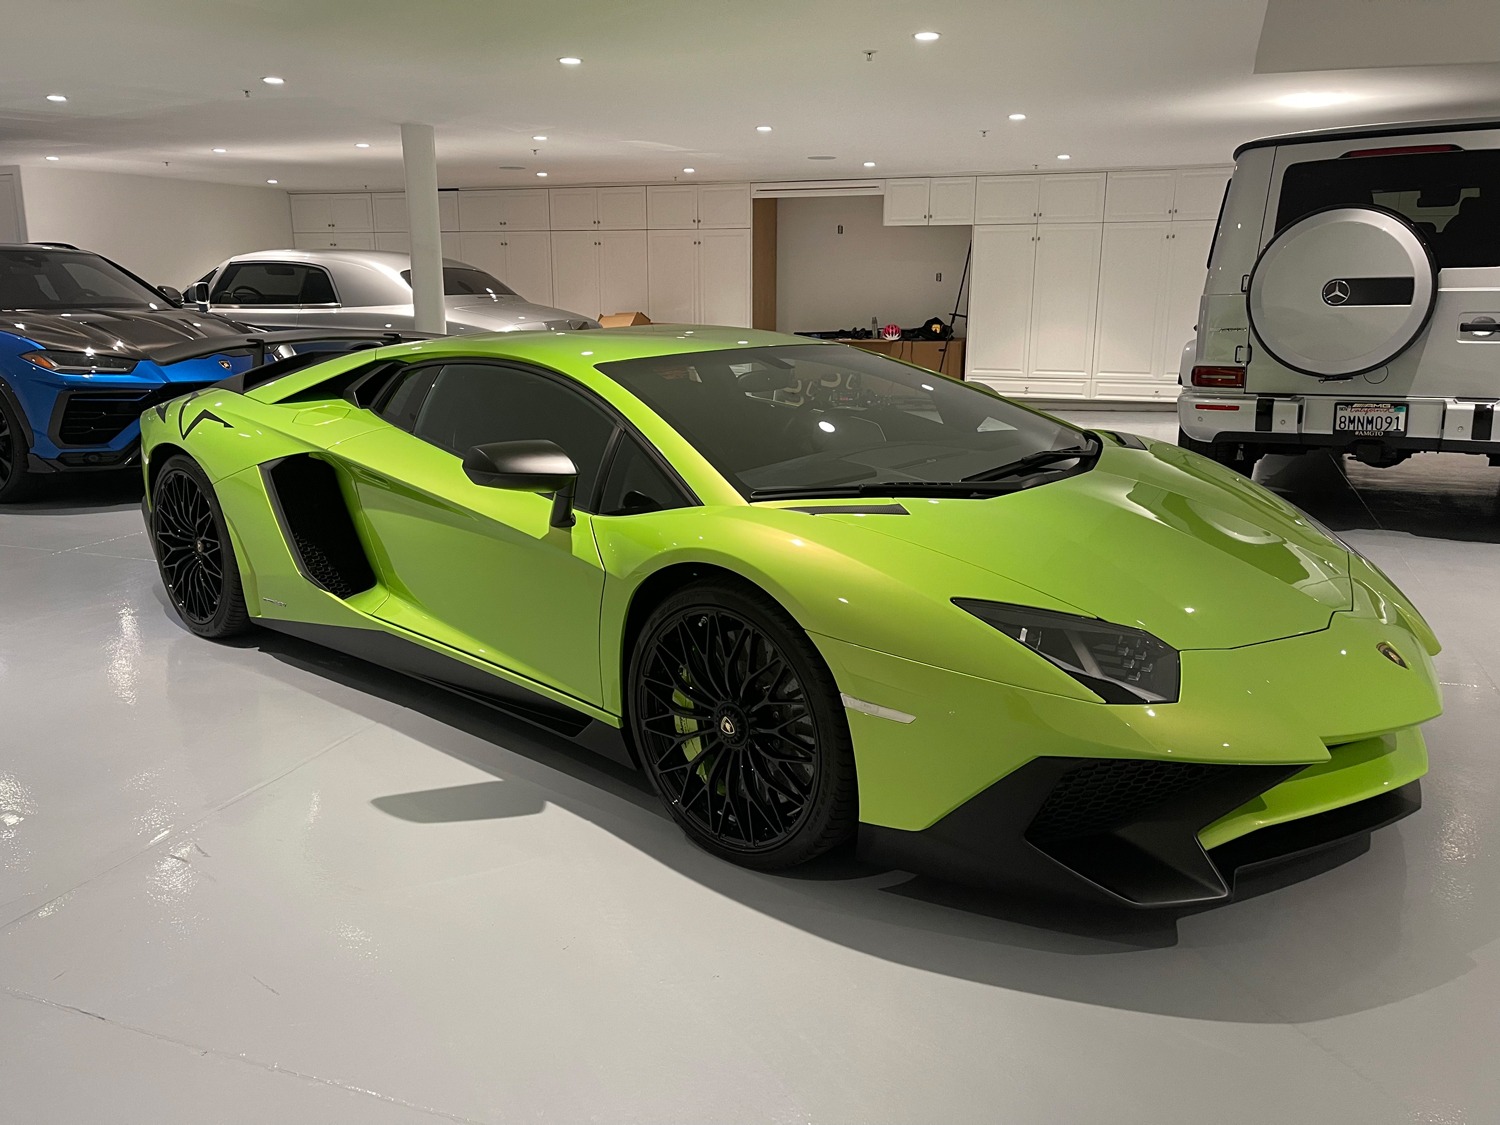 https://www.stradamotorsports.com/imagetag/59/main/l/Used-2016-Lamborghini-Aventador-LP-750-4-SV-1643410987.jpg